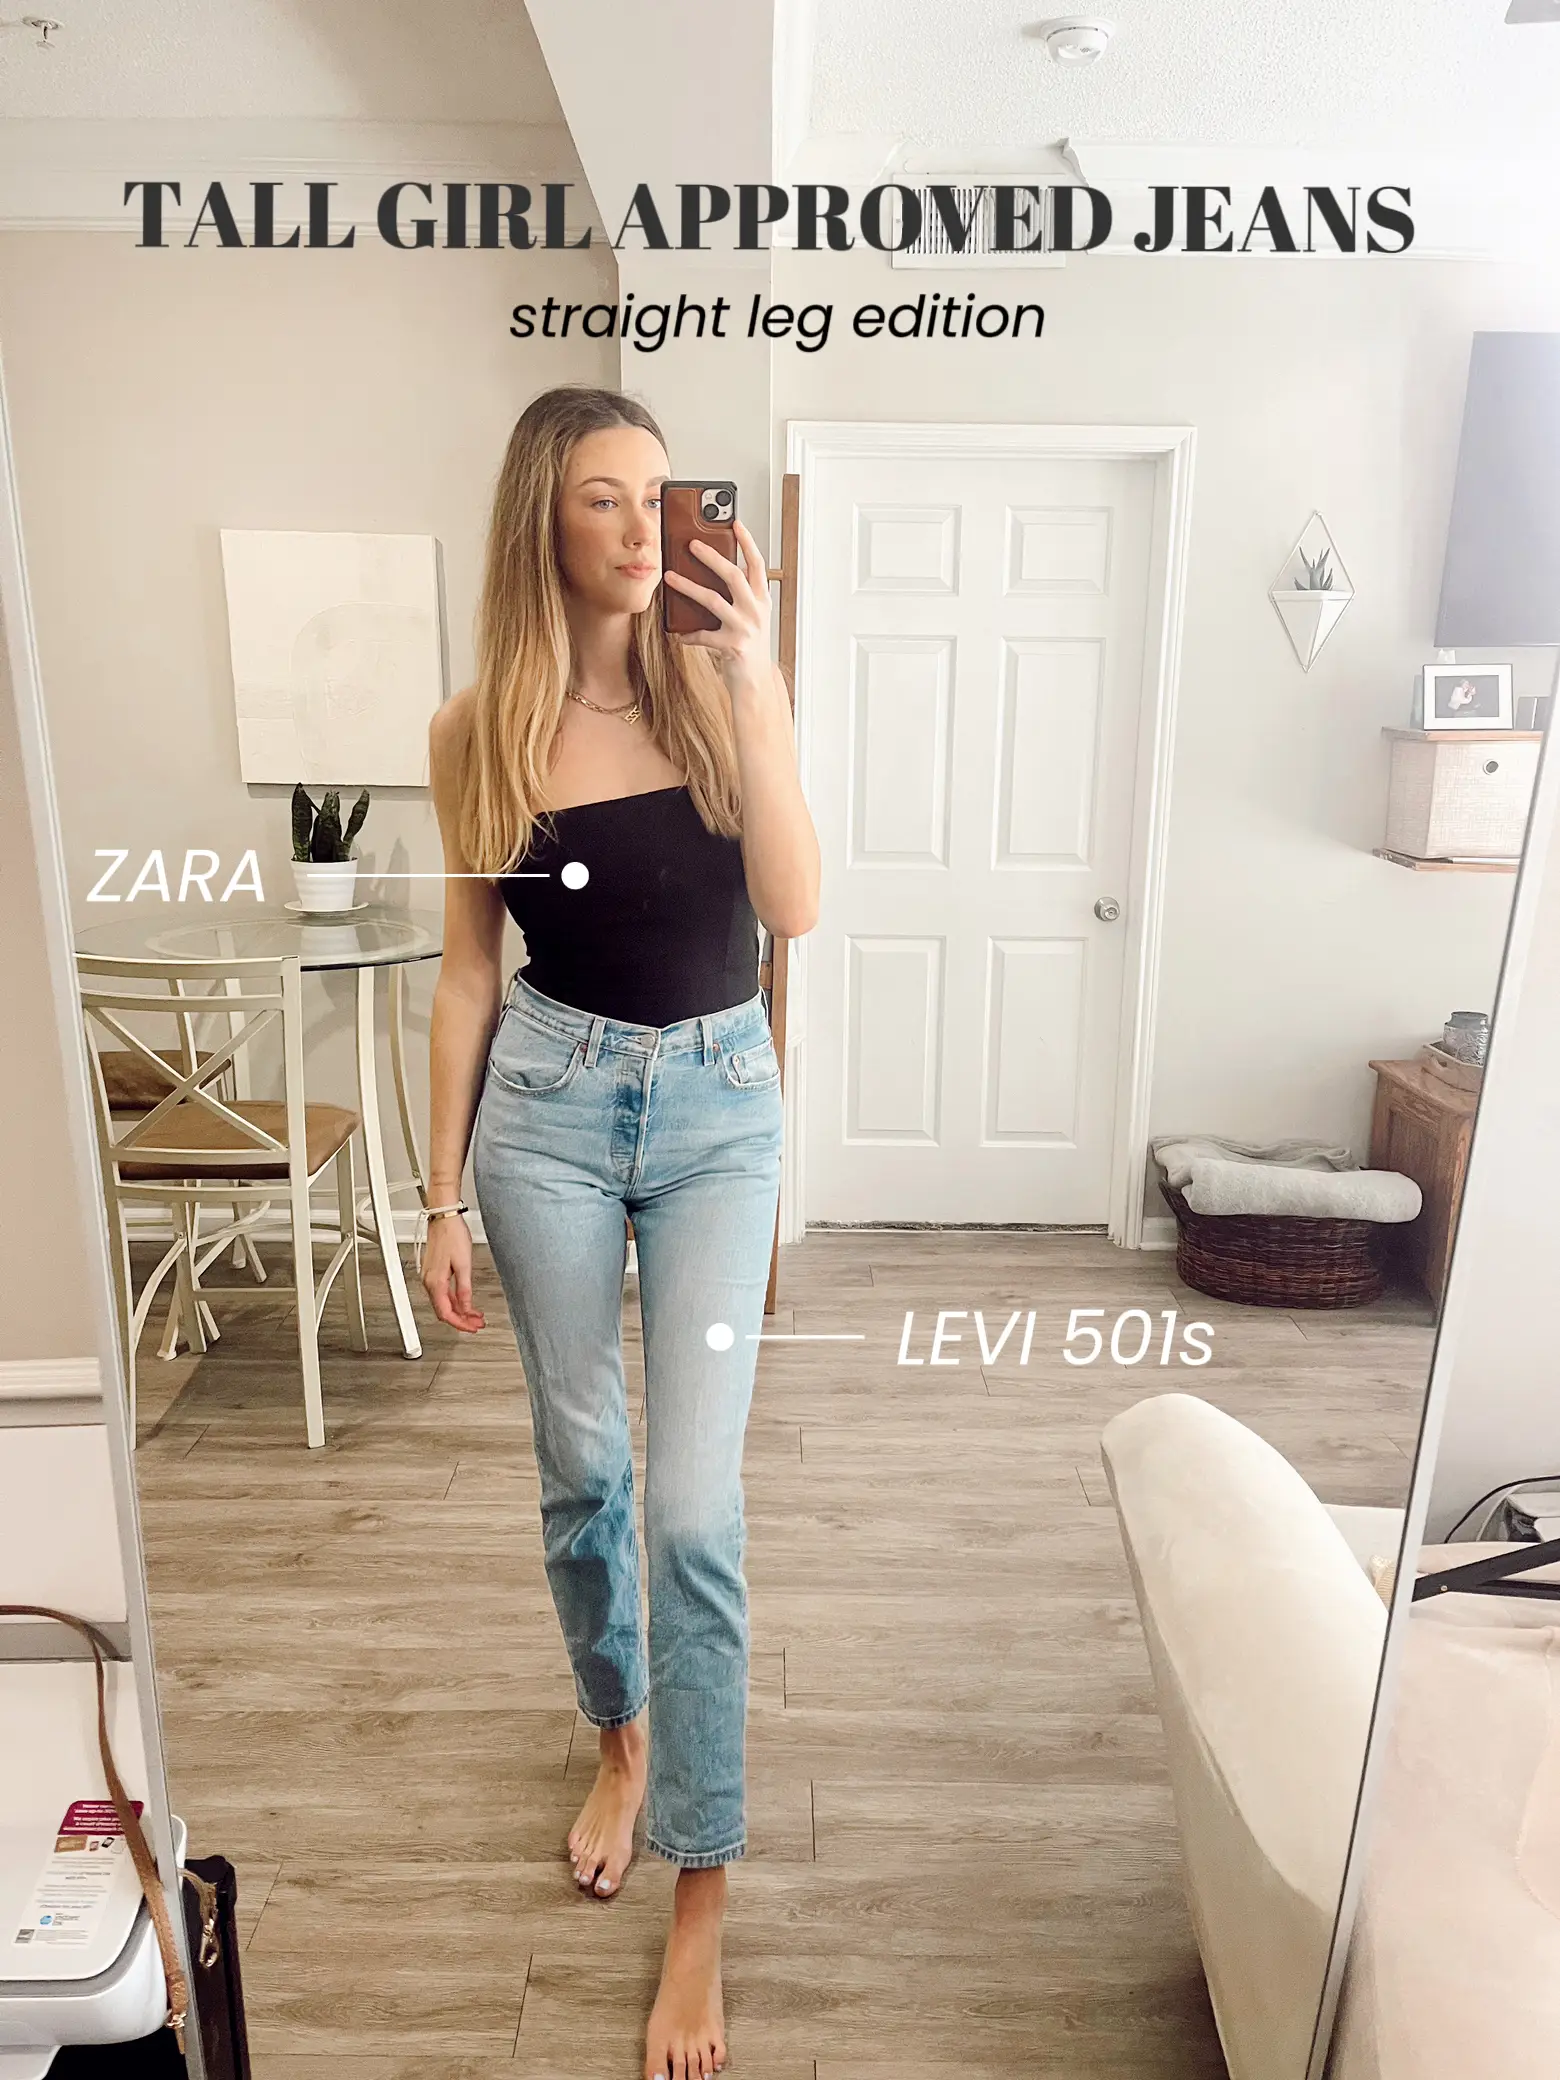 36 inch inseam jeans for tall women - Lemon8 Search